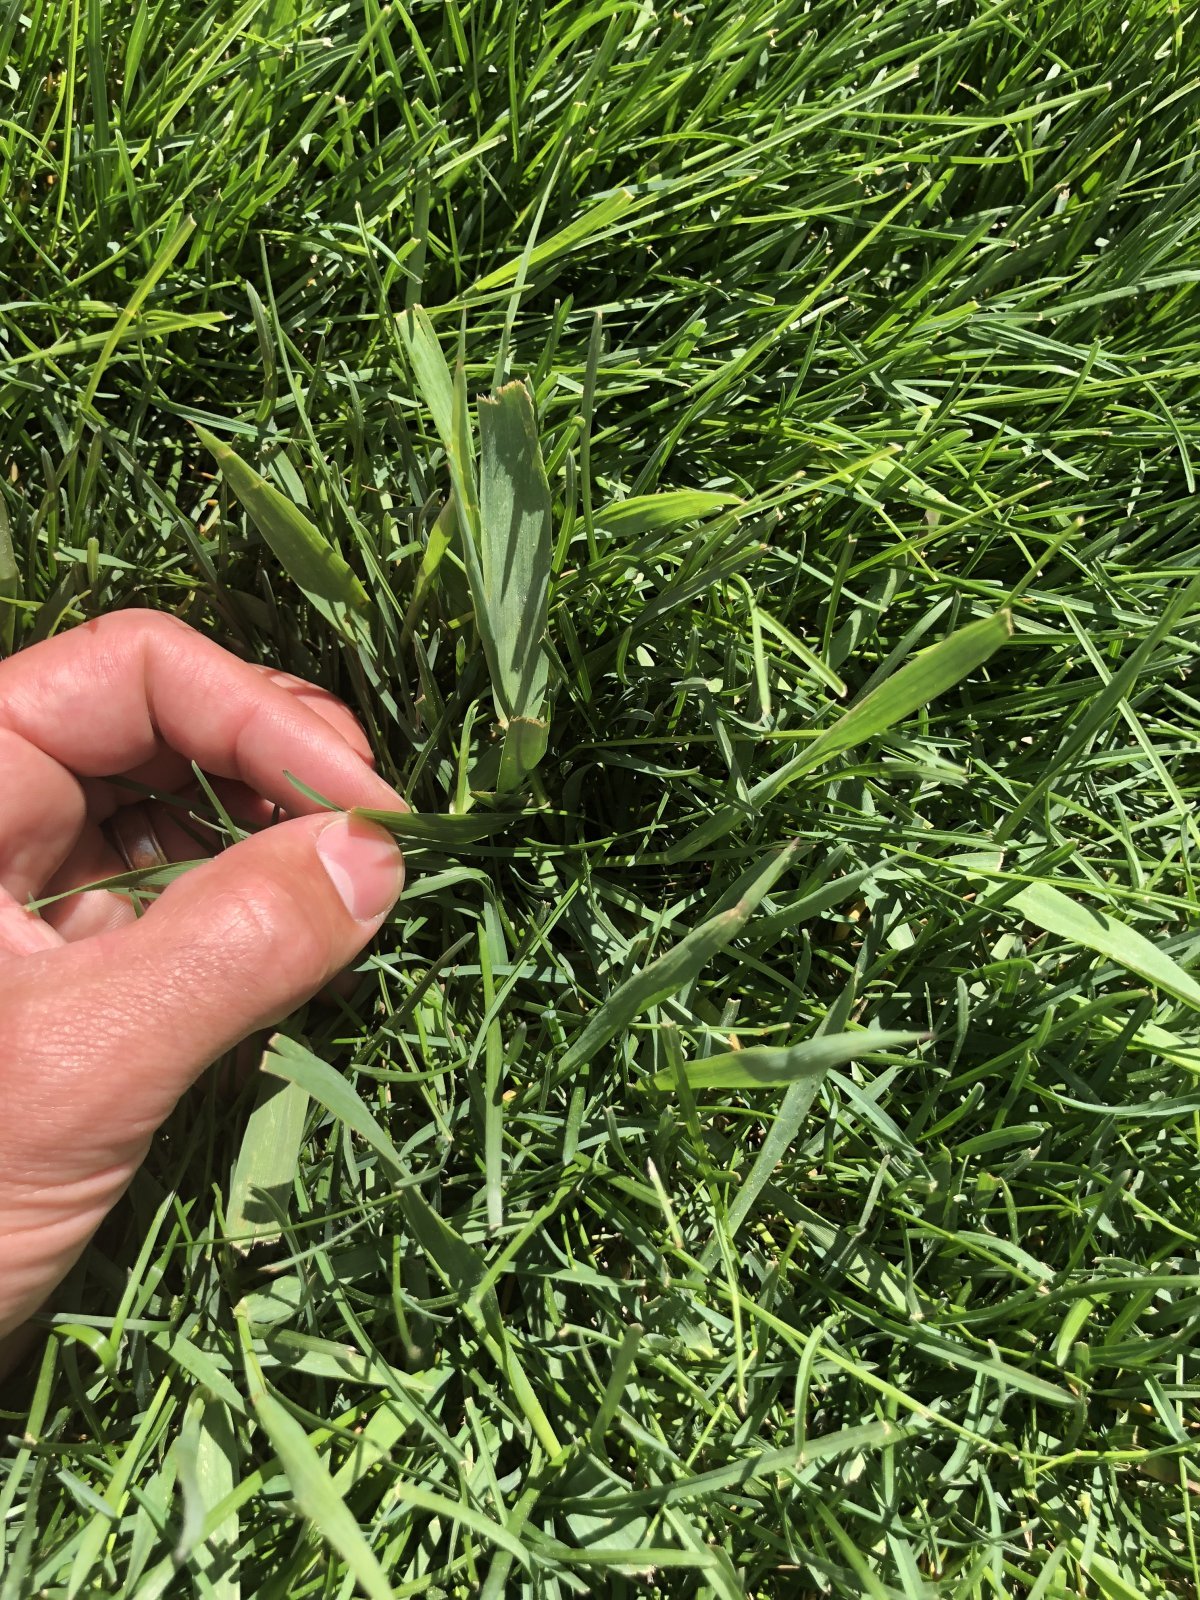 Grassy weed identification help!